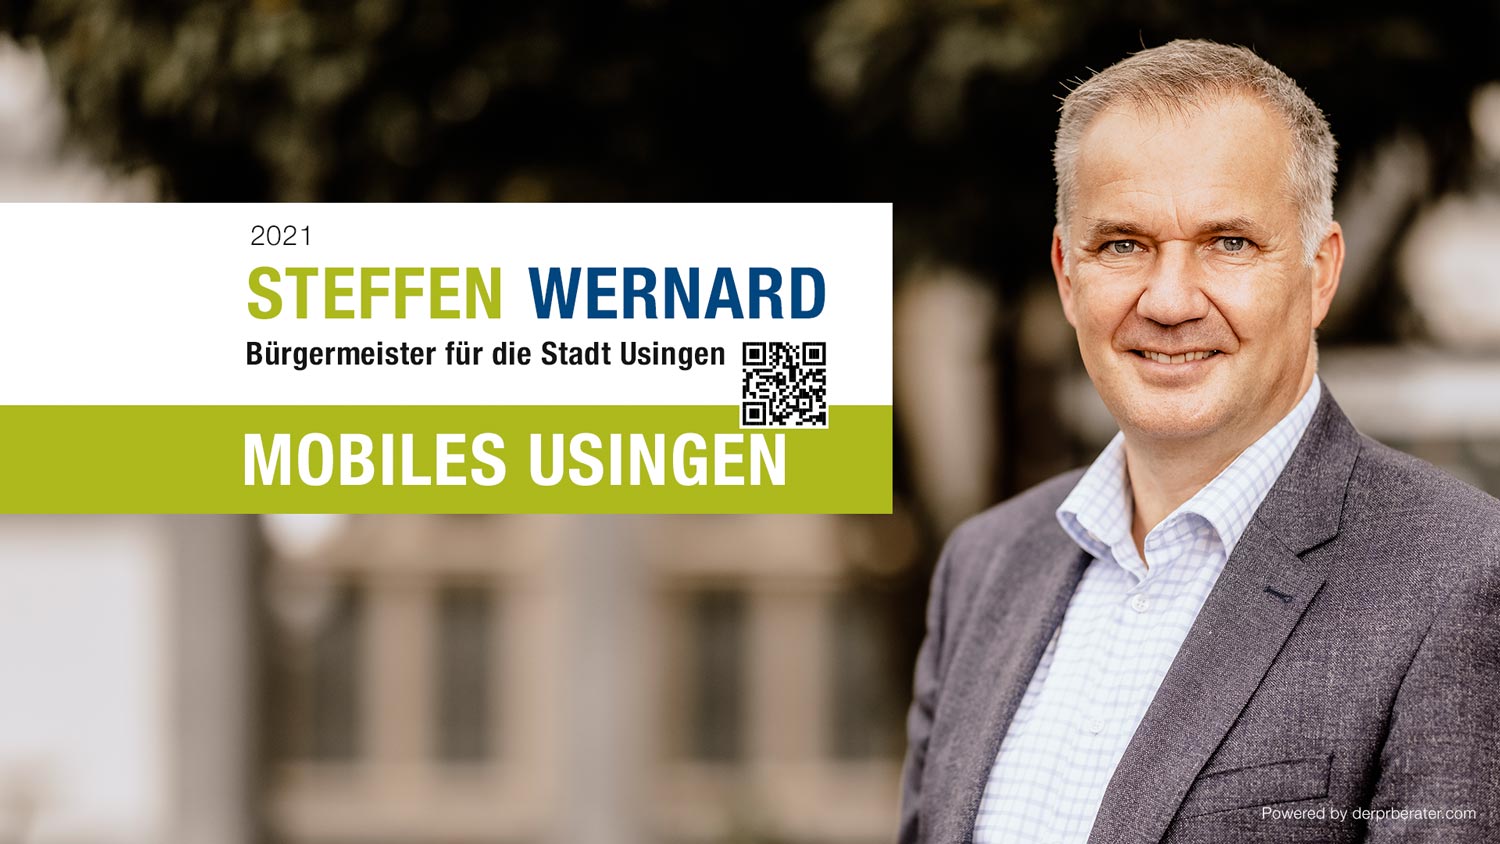 Steffen-Wernard-Projekt-Mobilitaet-mobiles-Usingen